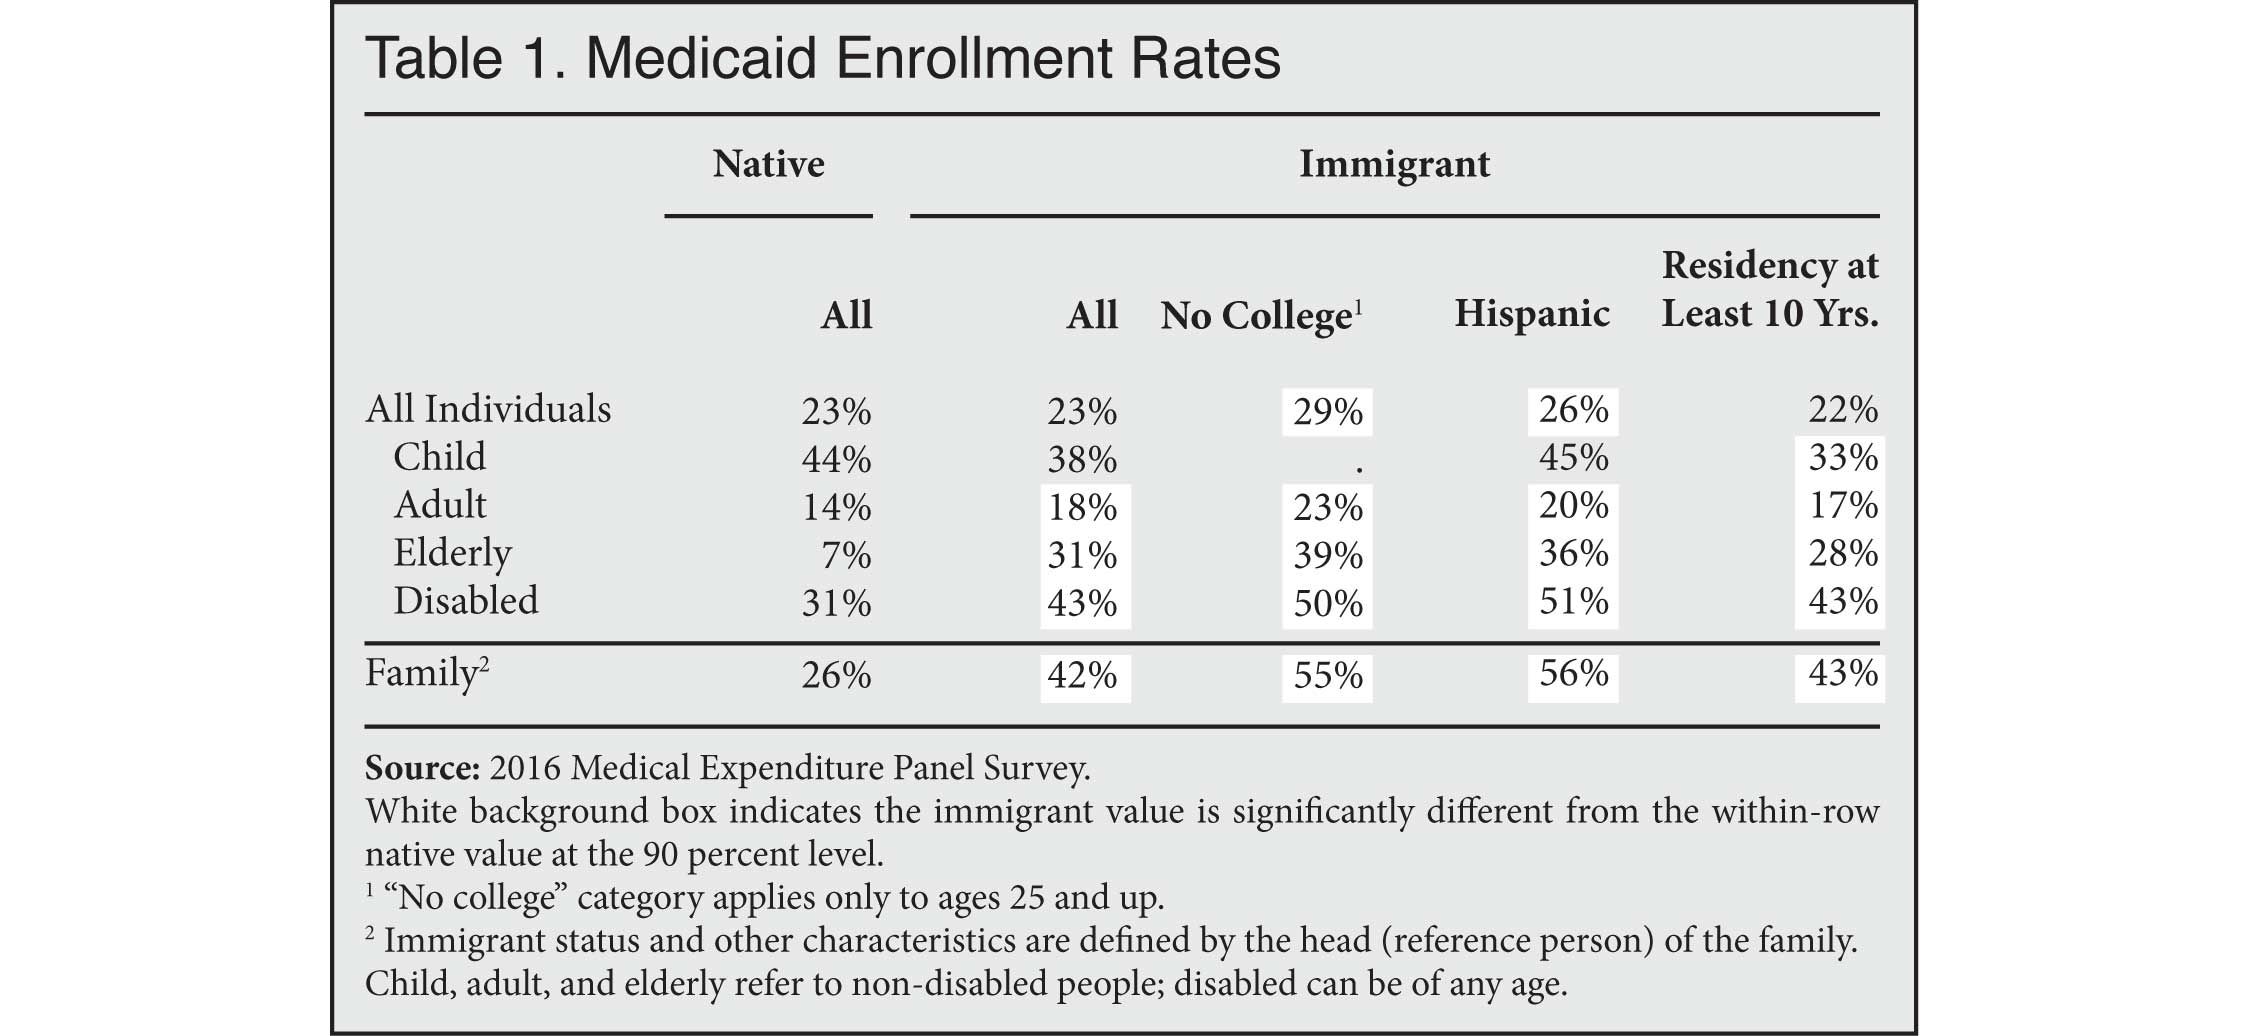 Table: Medicaid Enrollment Rates, Immigrants and Natives